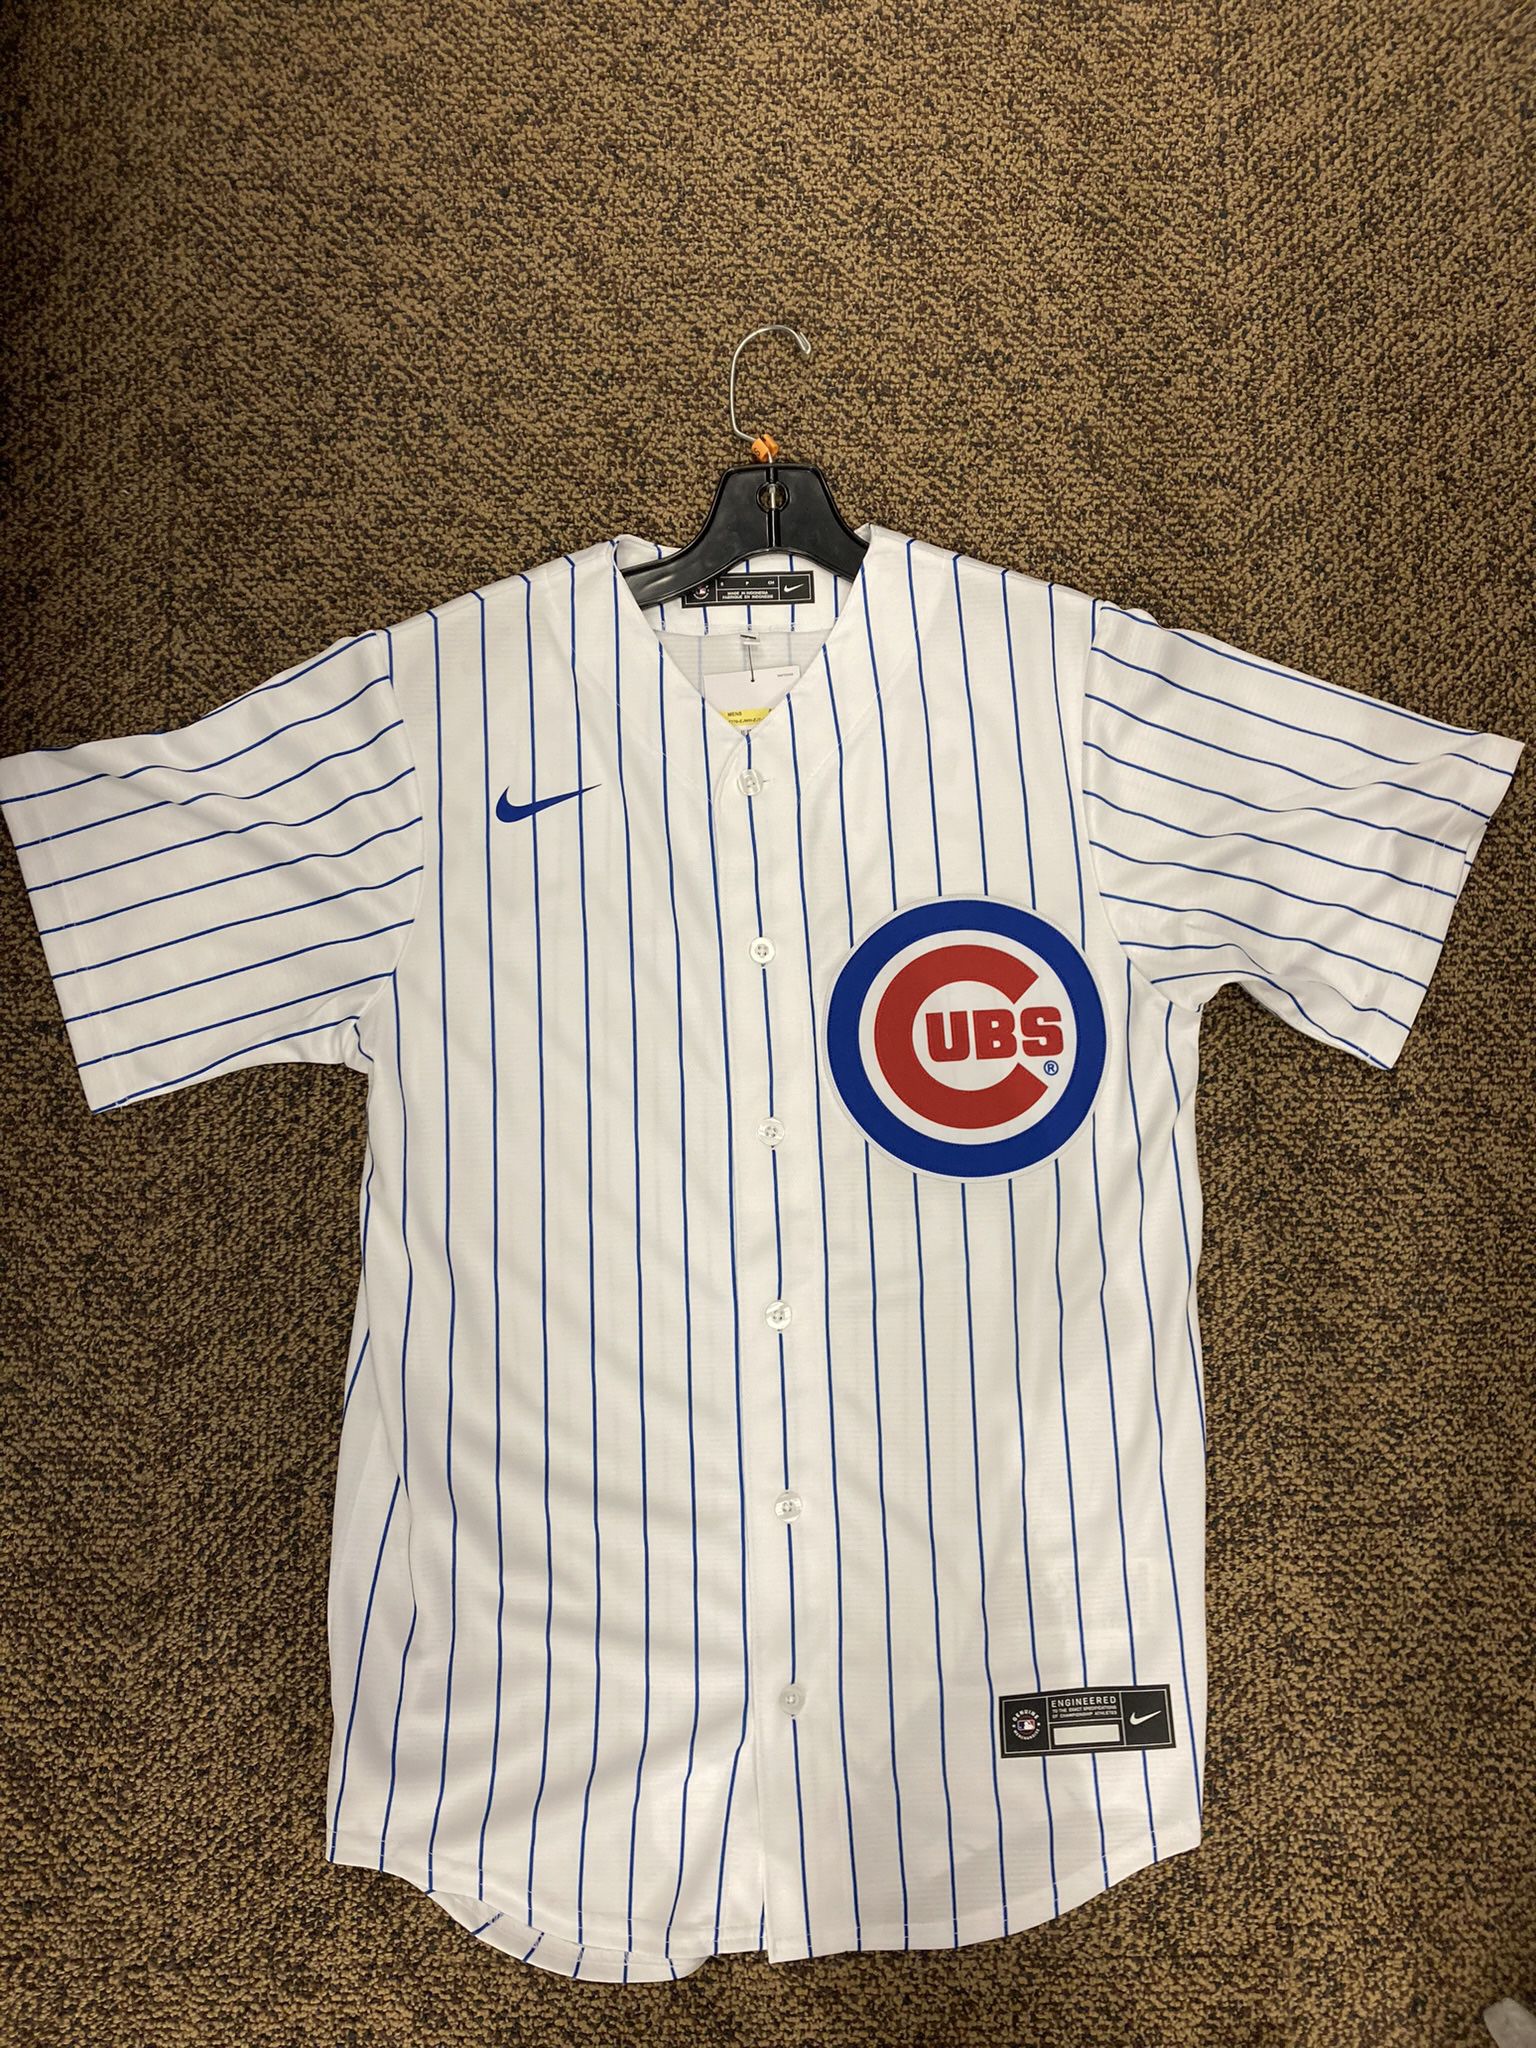 Chicago Cubs Baseball Jersey #27 Suzuki 